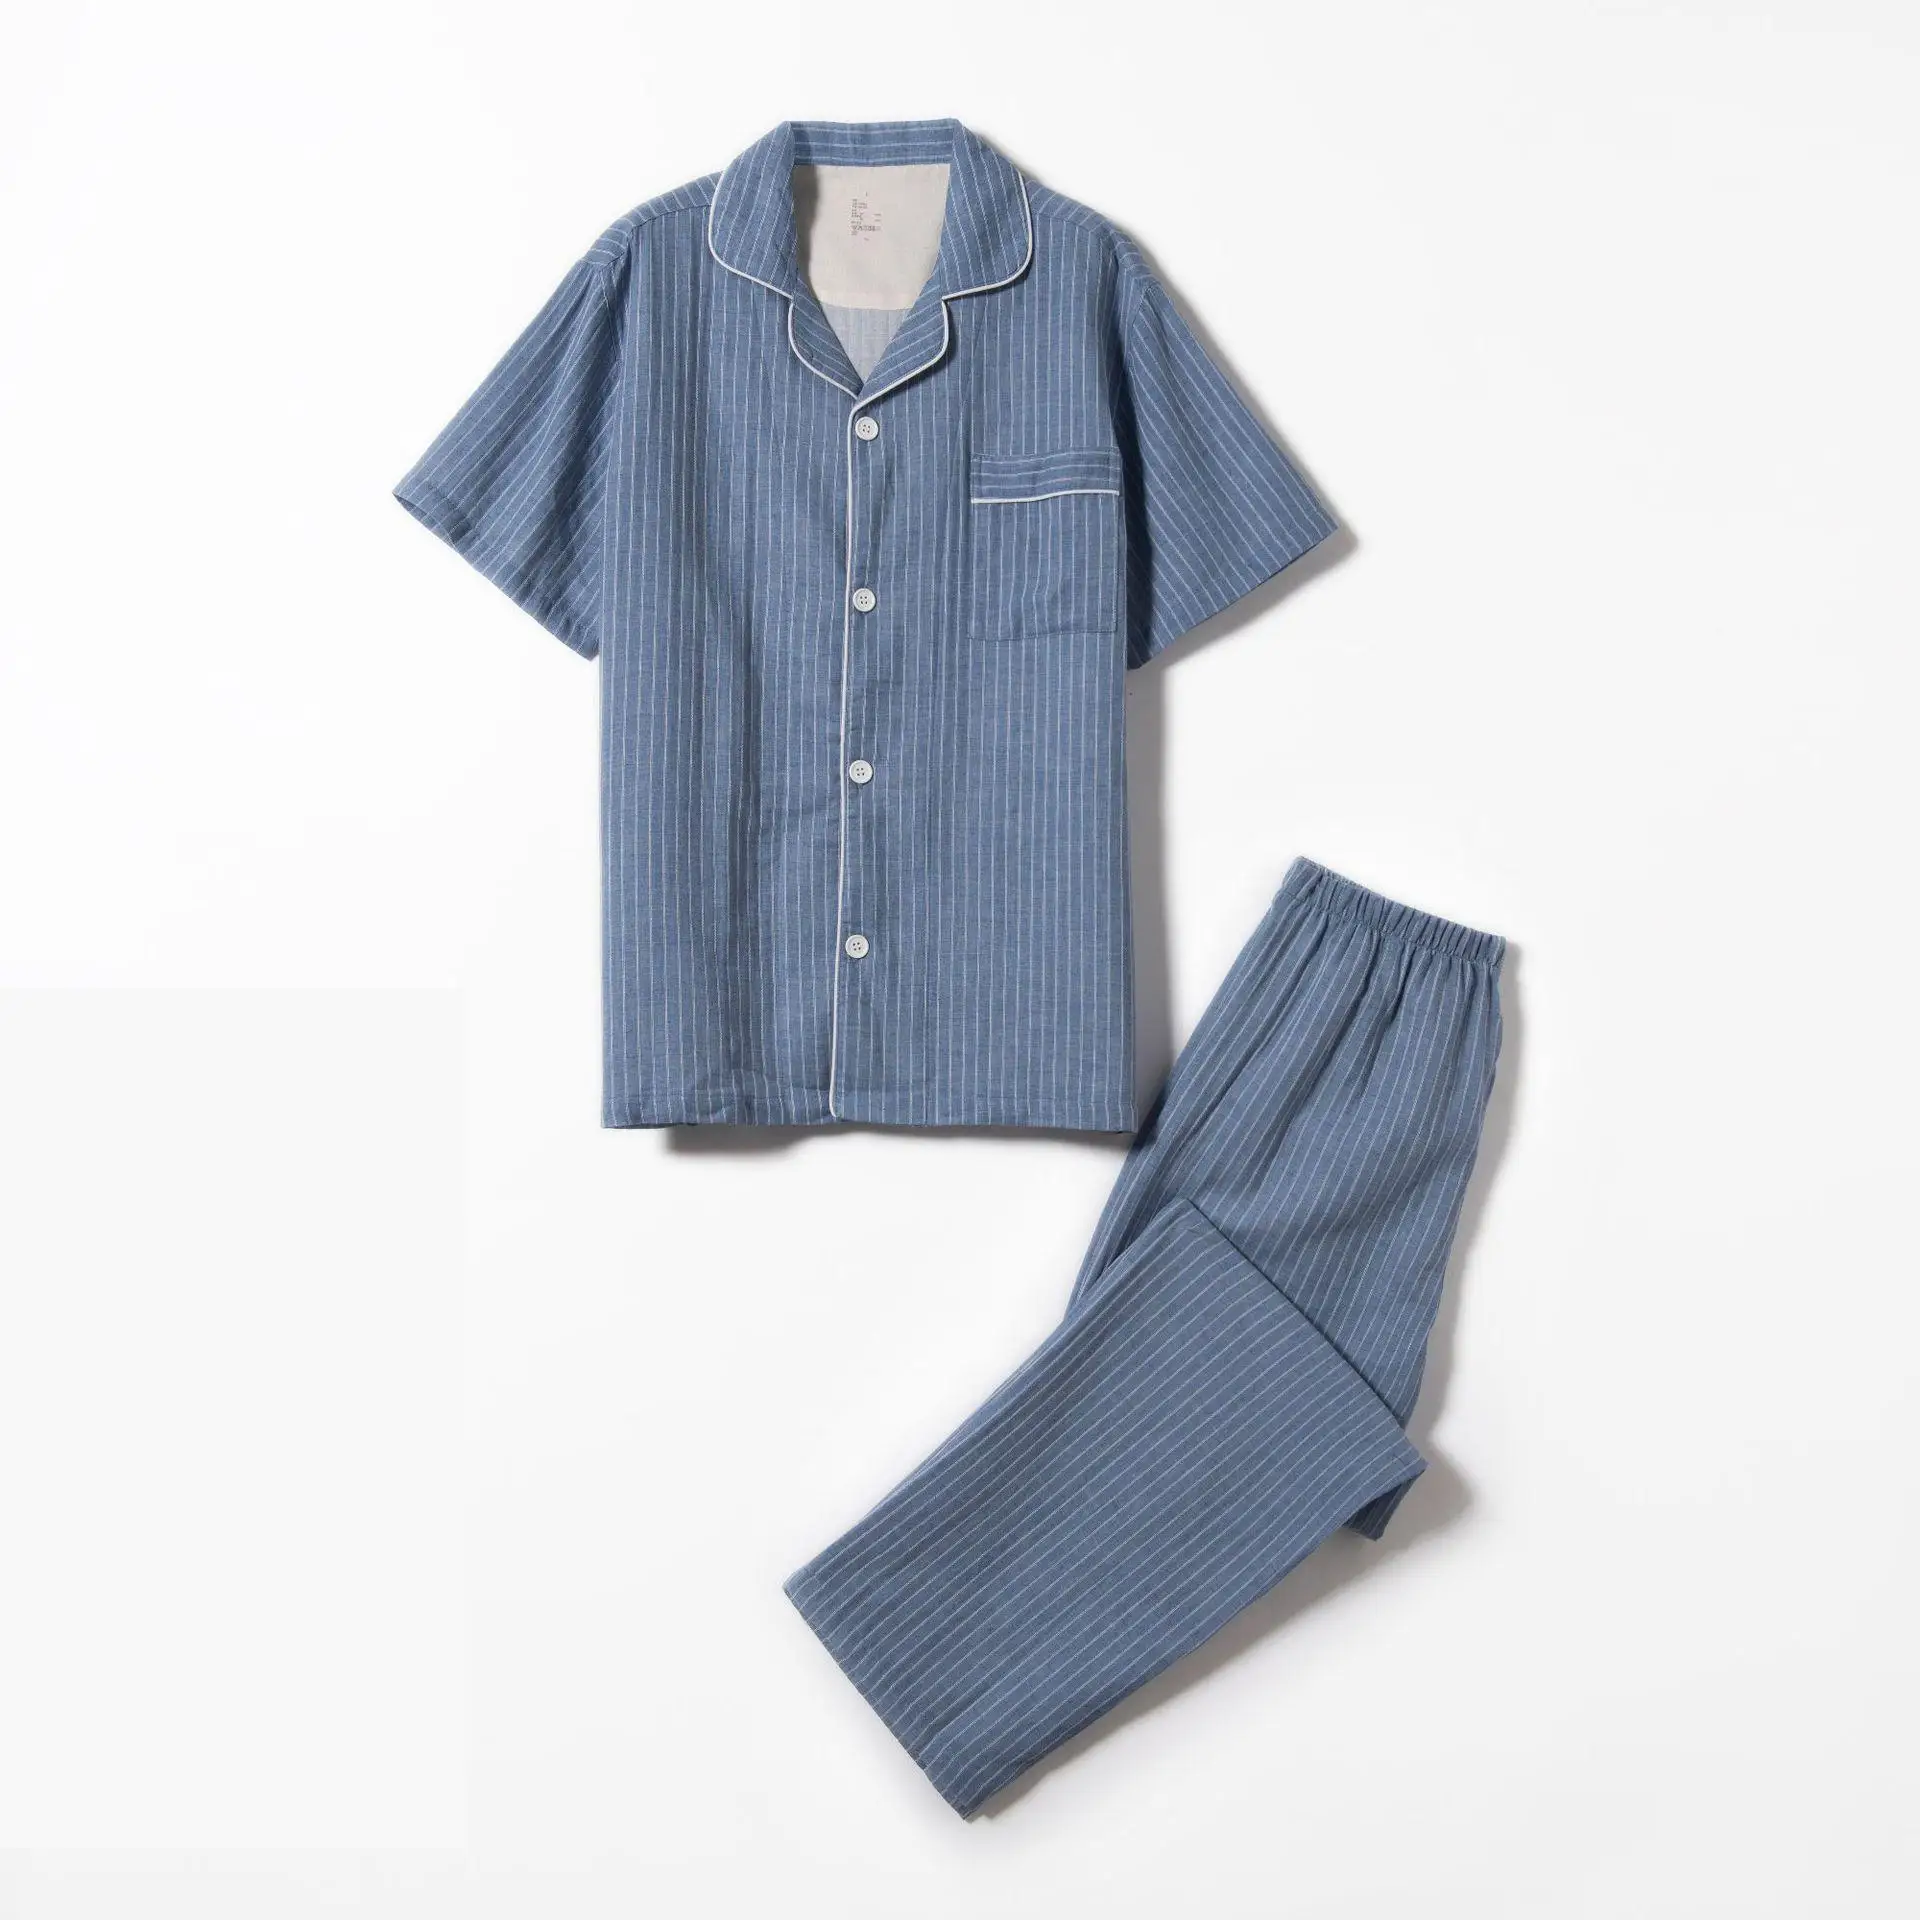 M-XL Cotton Mens Pajama Sets Spring Summer Male Sleepwear Suits T Shirt+Pants 2pcs Short Sleeve Striped Man Clothes H78